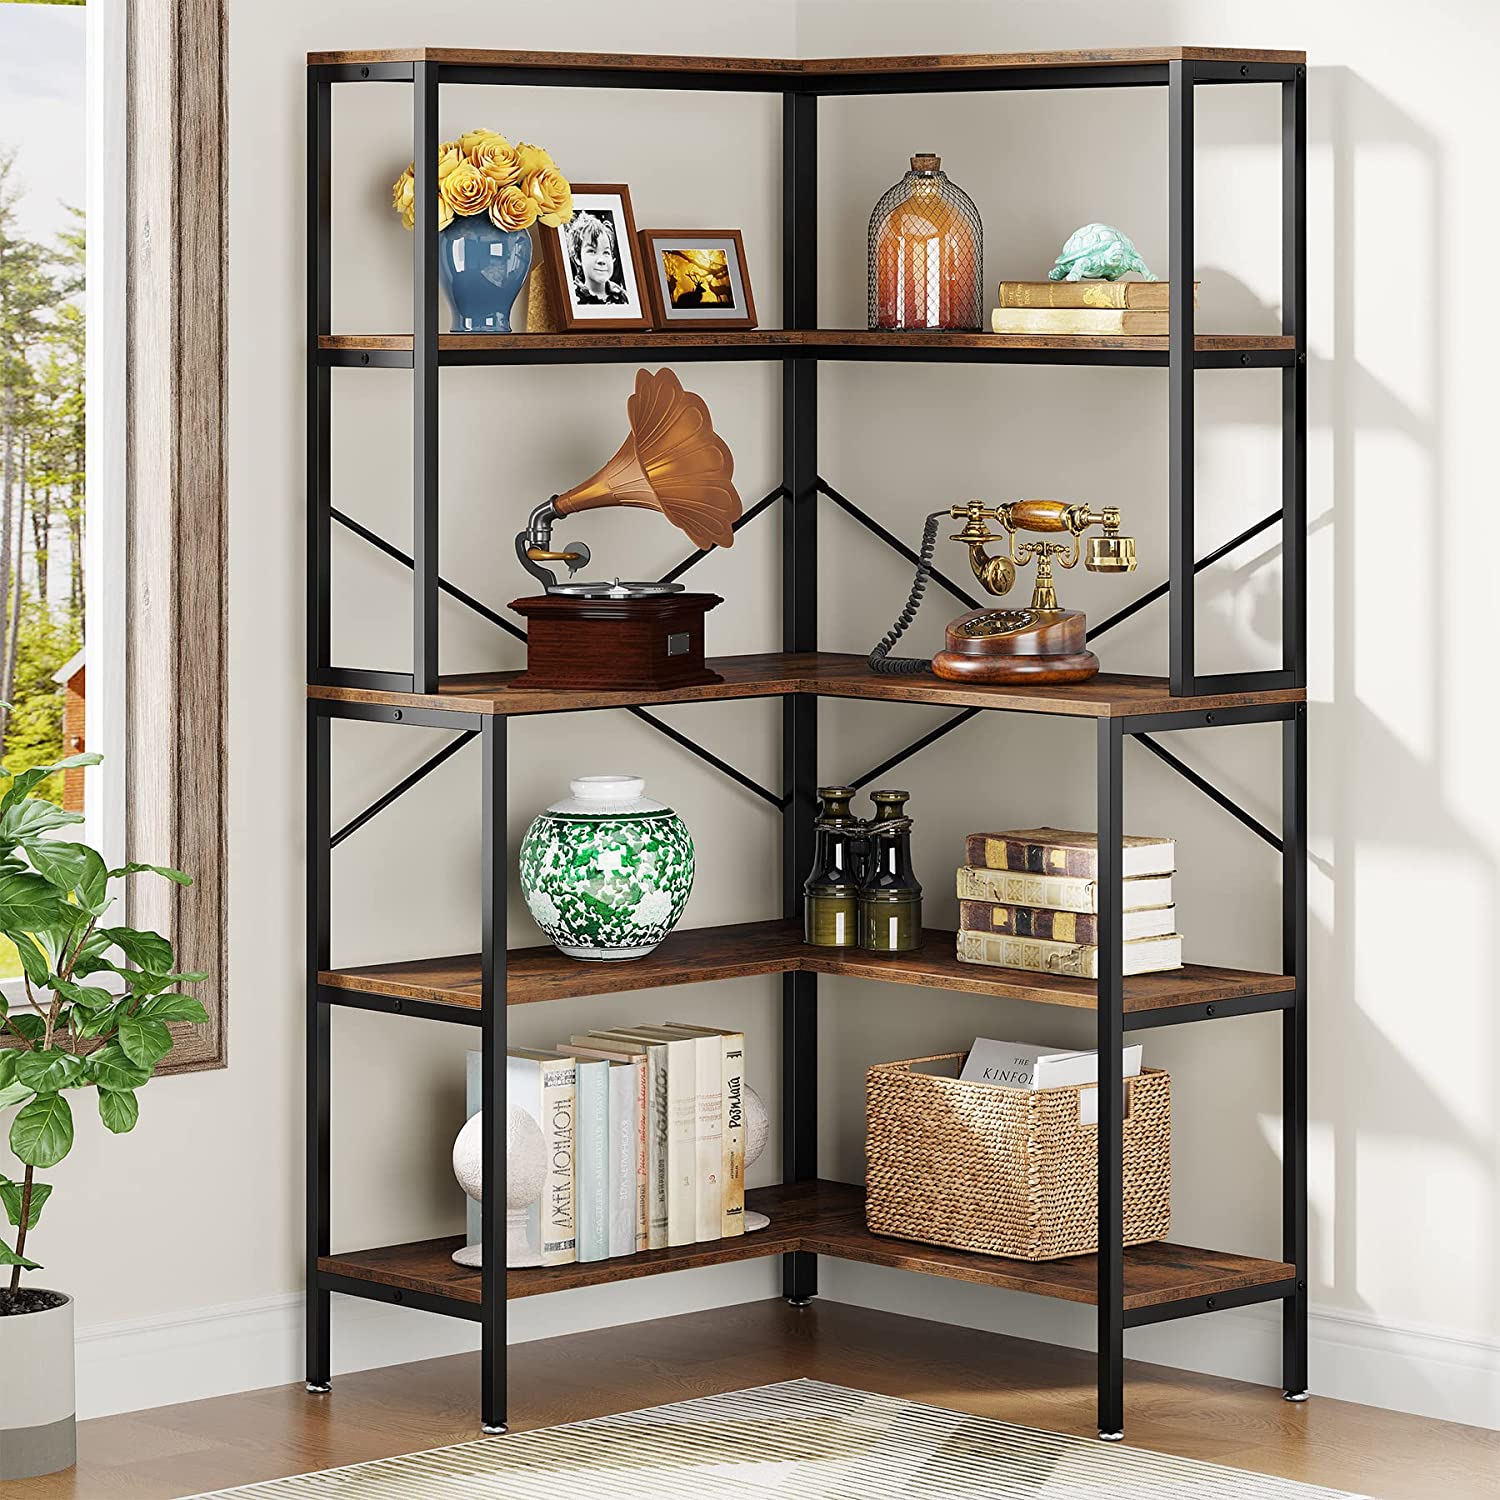 YITAHOME 5-Tier Bookshelf Storage Rack Display Shelves Organizer Industrial Wood, Brown